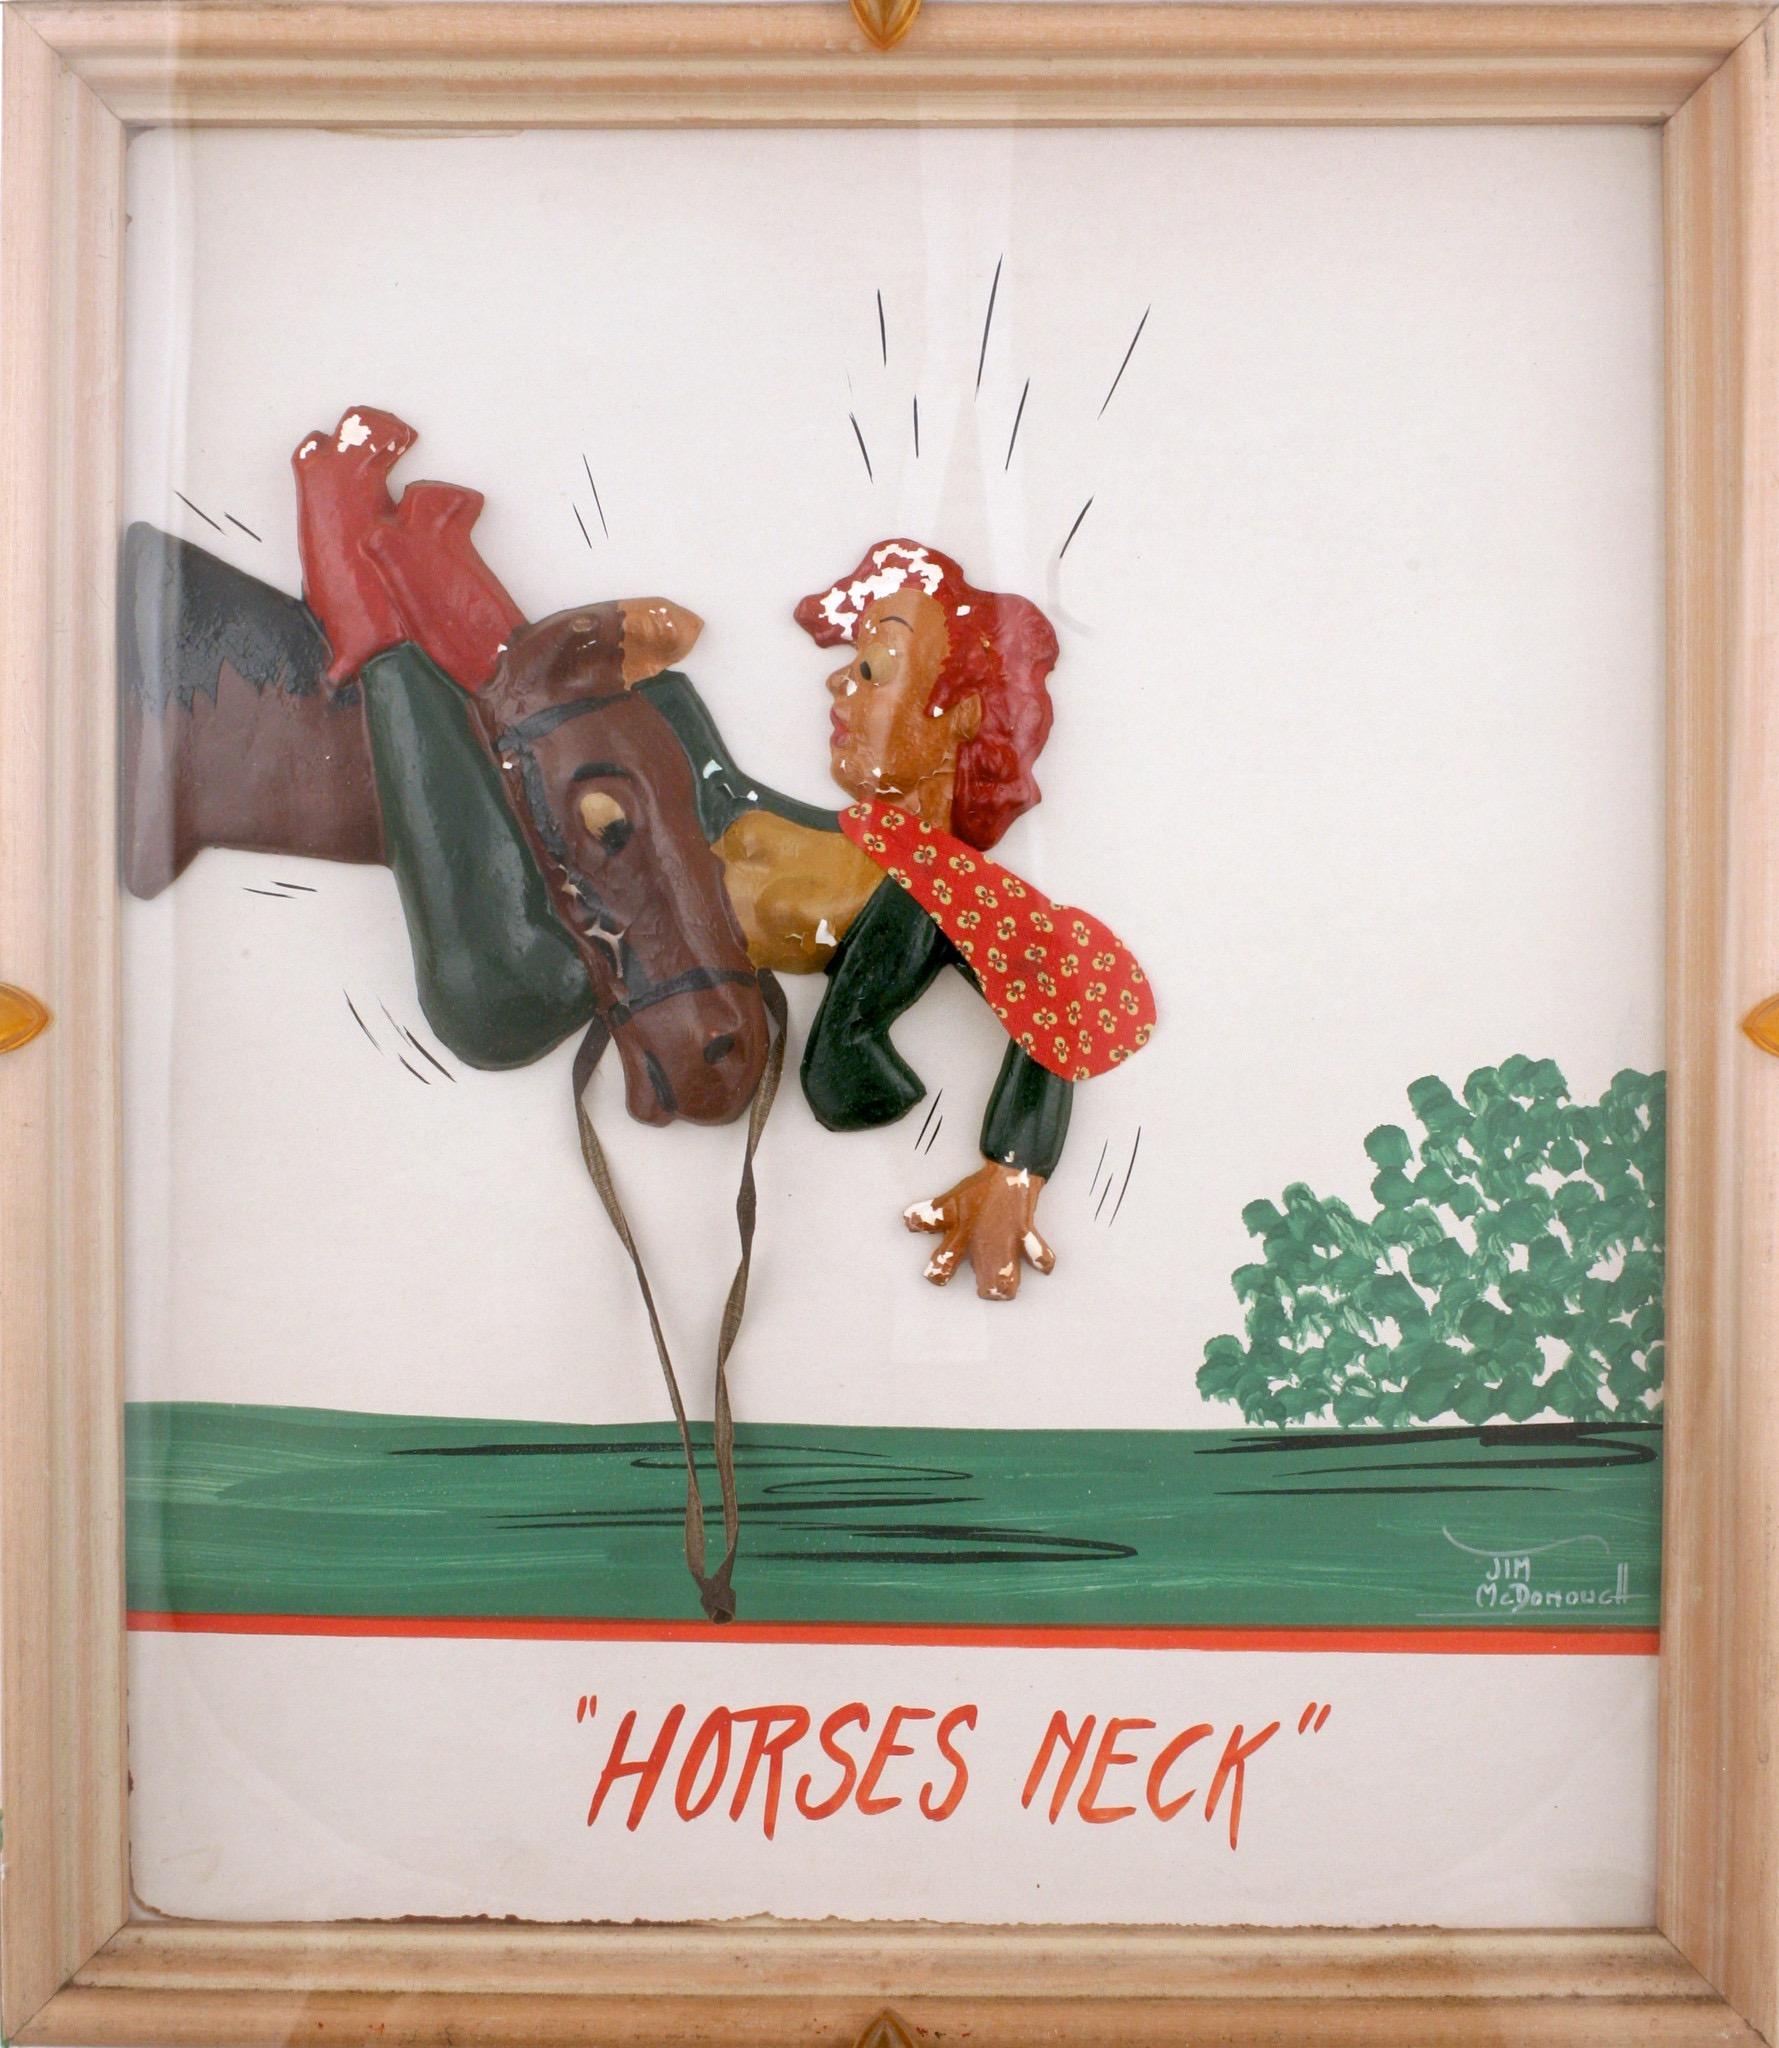 Jim McDonough Figurative Art - "Horses Neck"